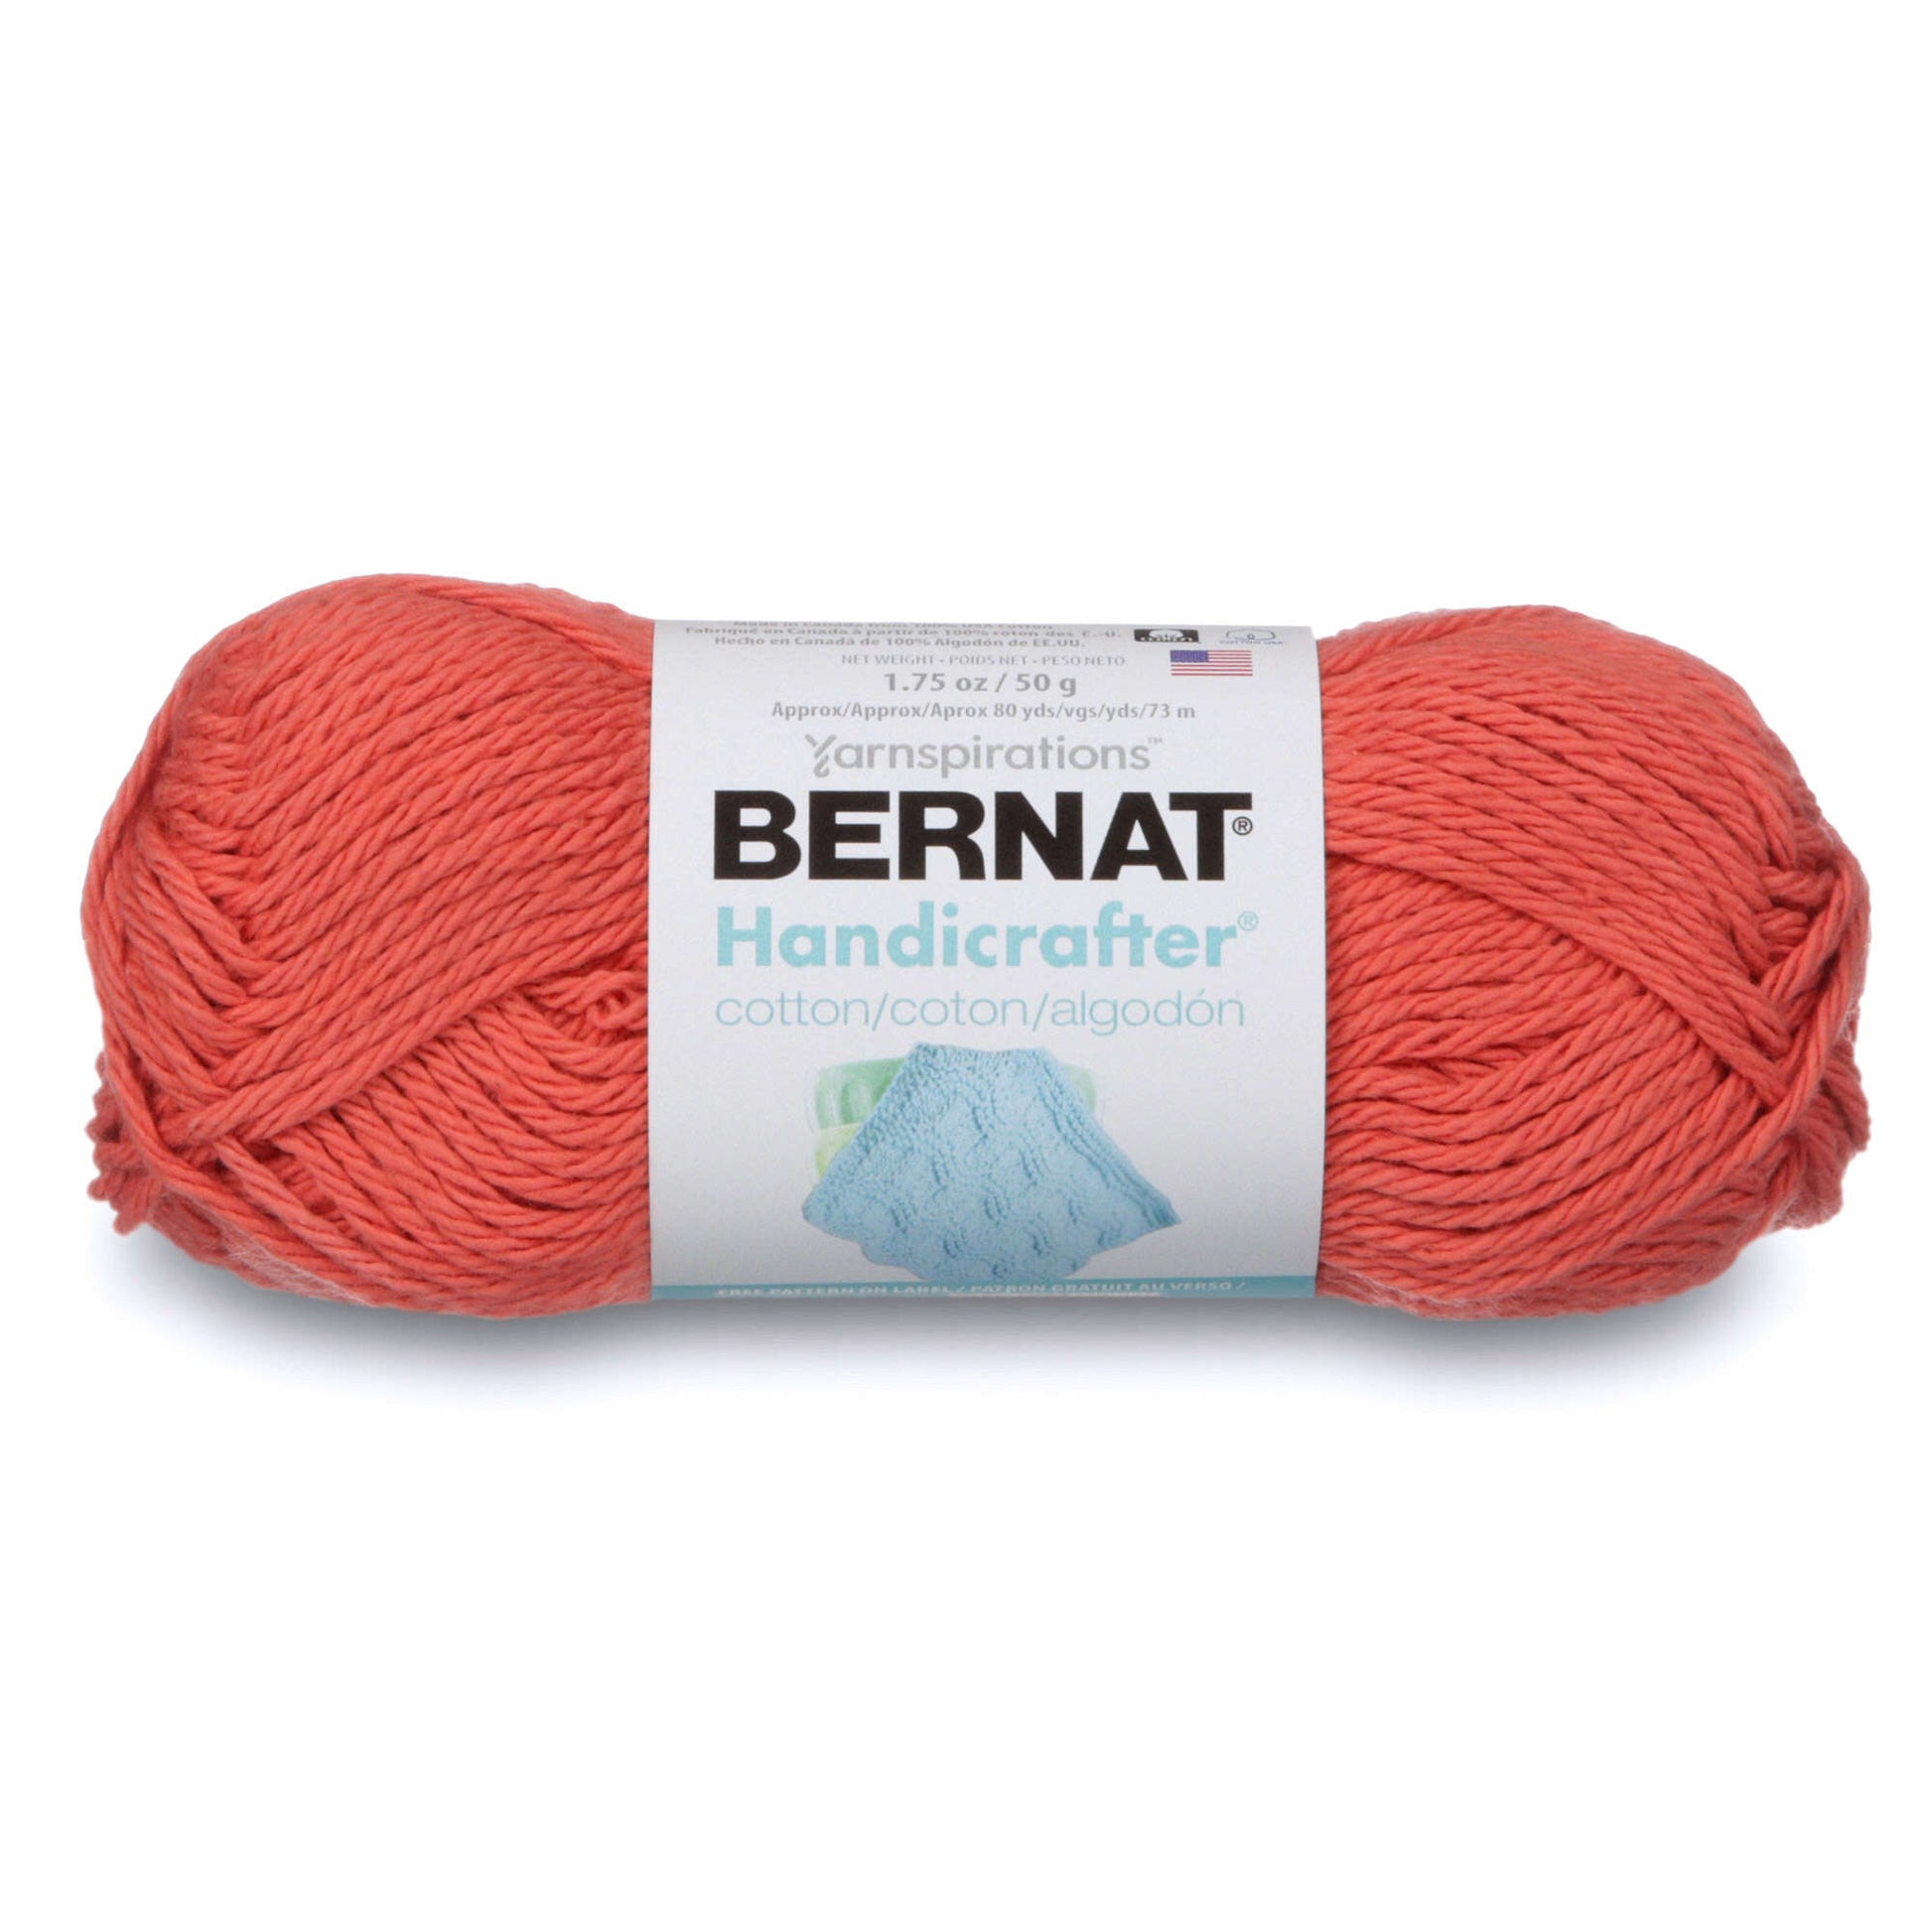 Bernat Handicrafter Cotton Yarn Tangerine